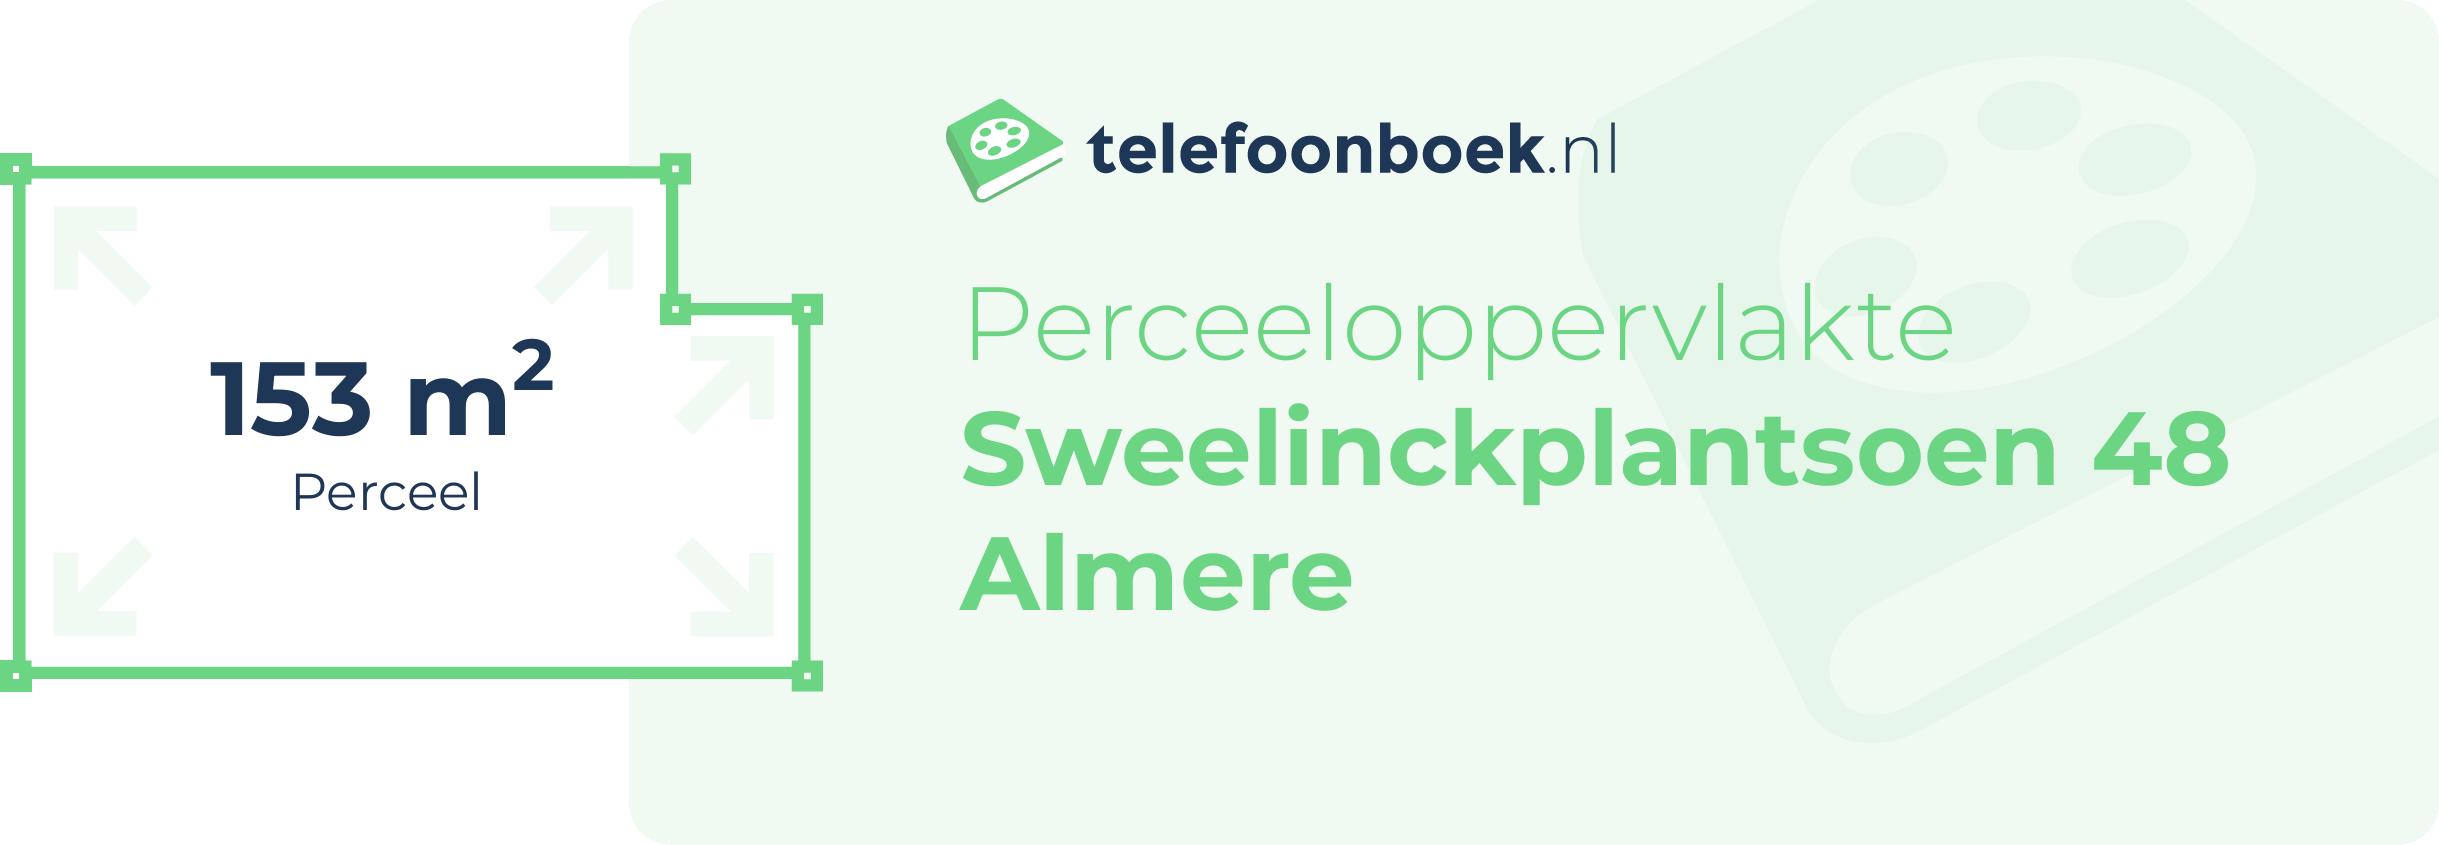 Perceeloppervlakte Sweelinckplantsoen 48 Almere